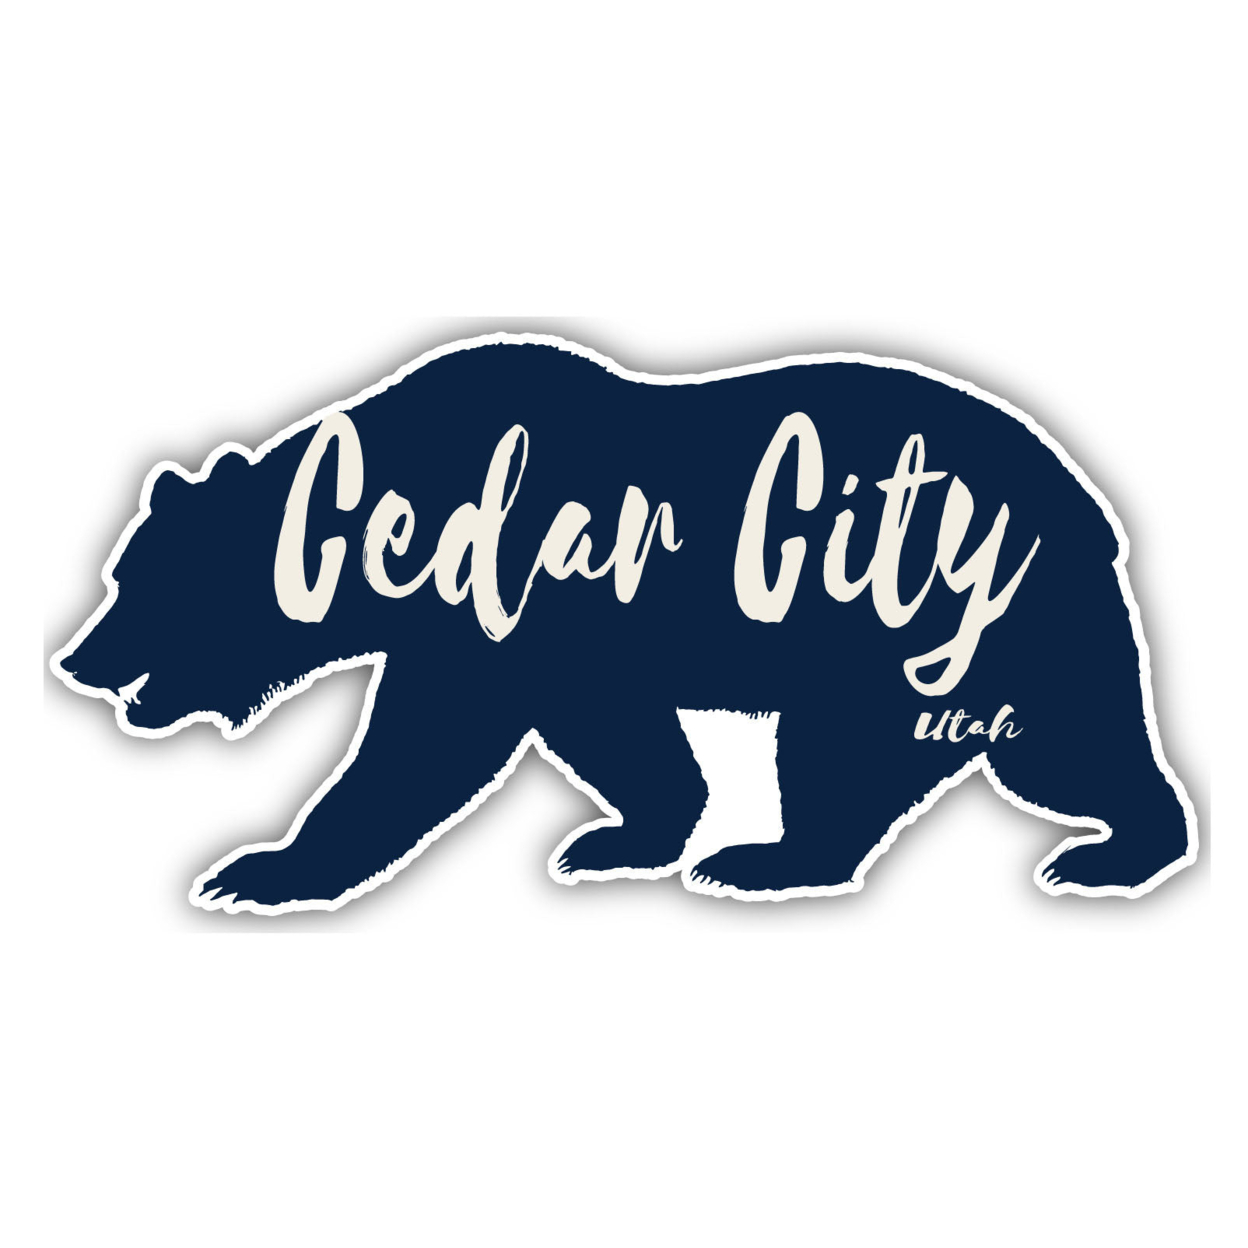 Cedar City Utah Souvenir Decorative Stickers (Choose Theme And Size) - 4-Pack, 6-Inch, Bear